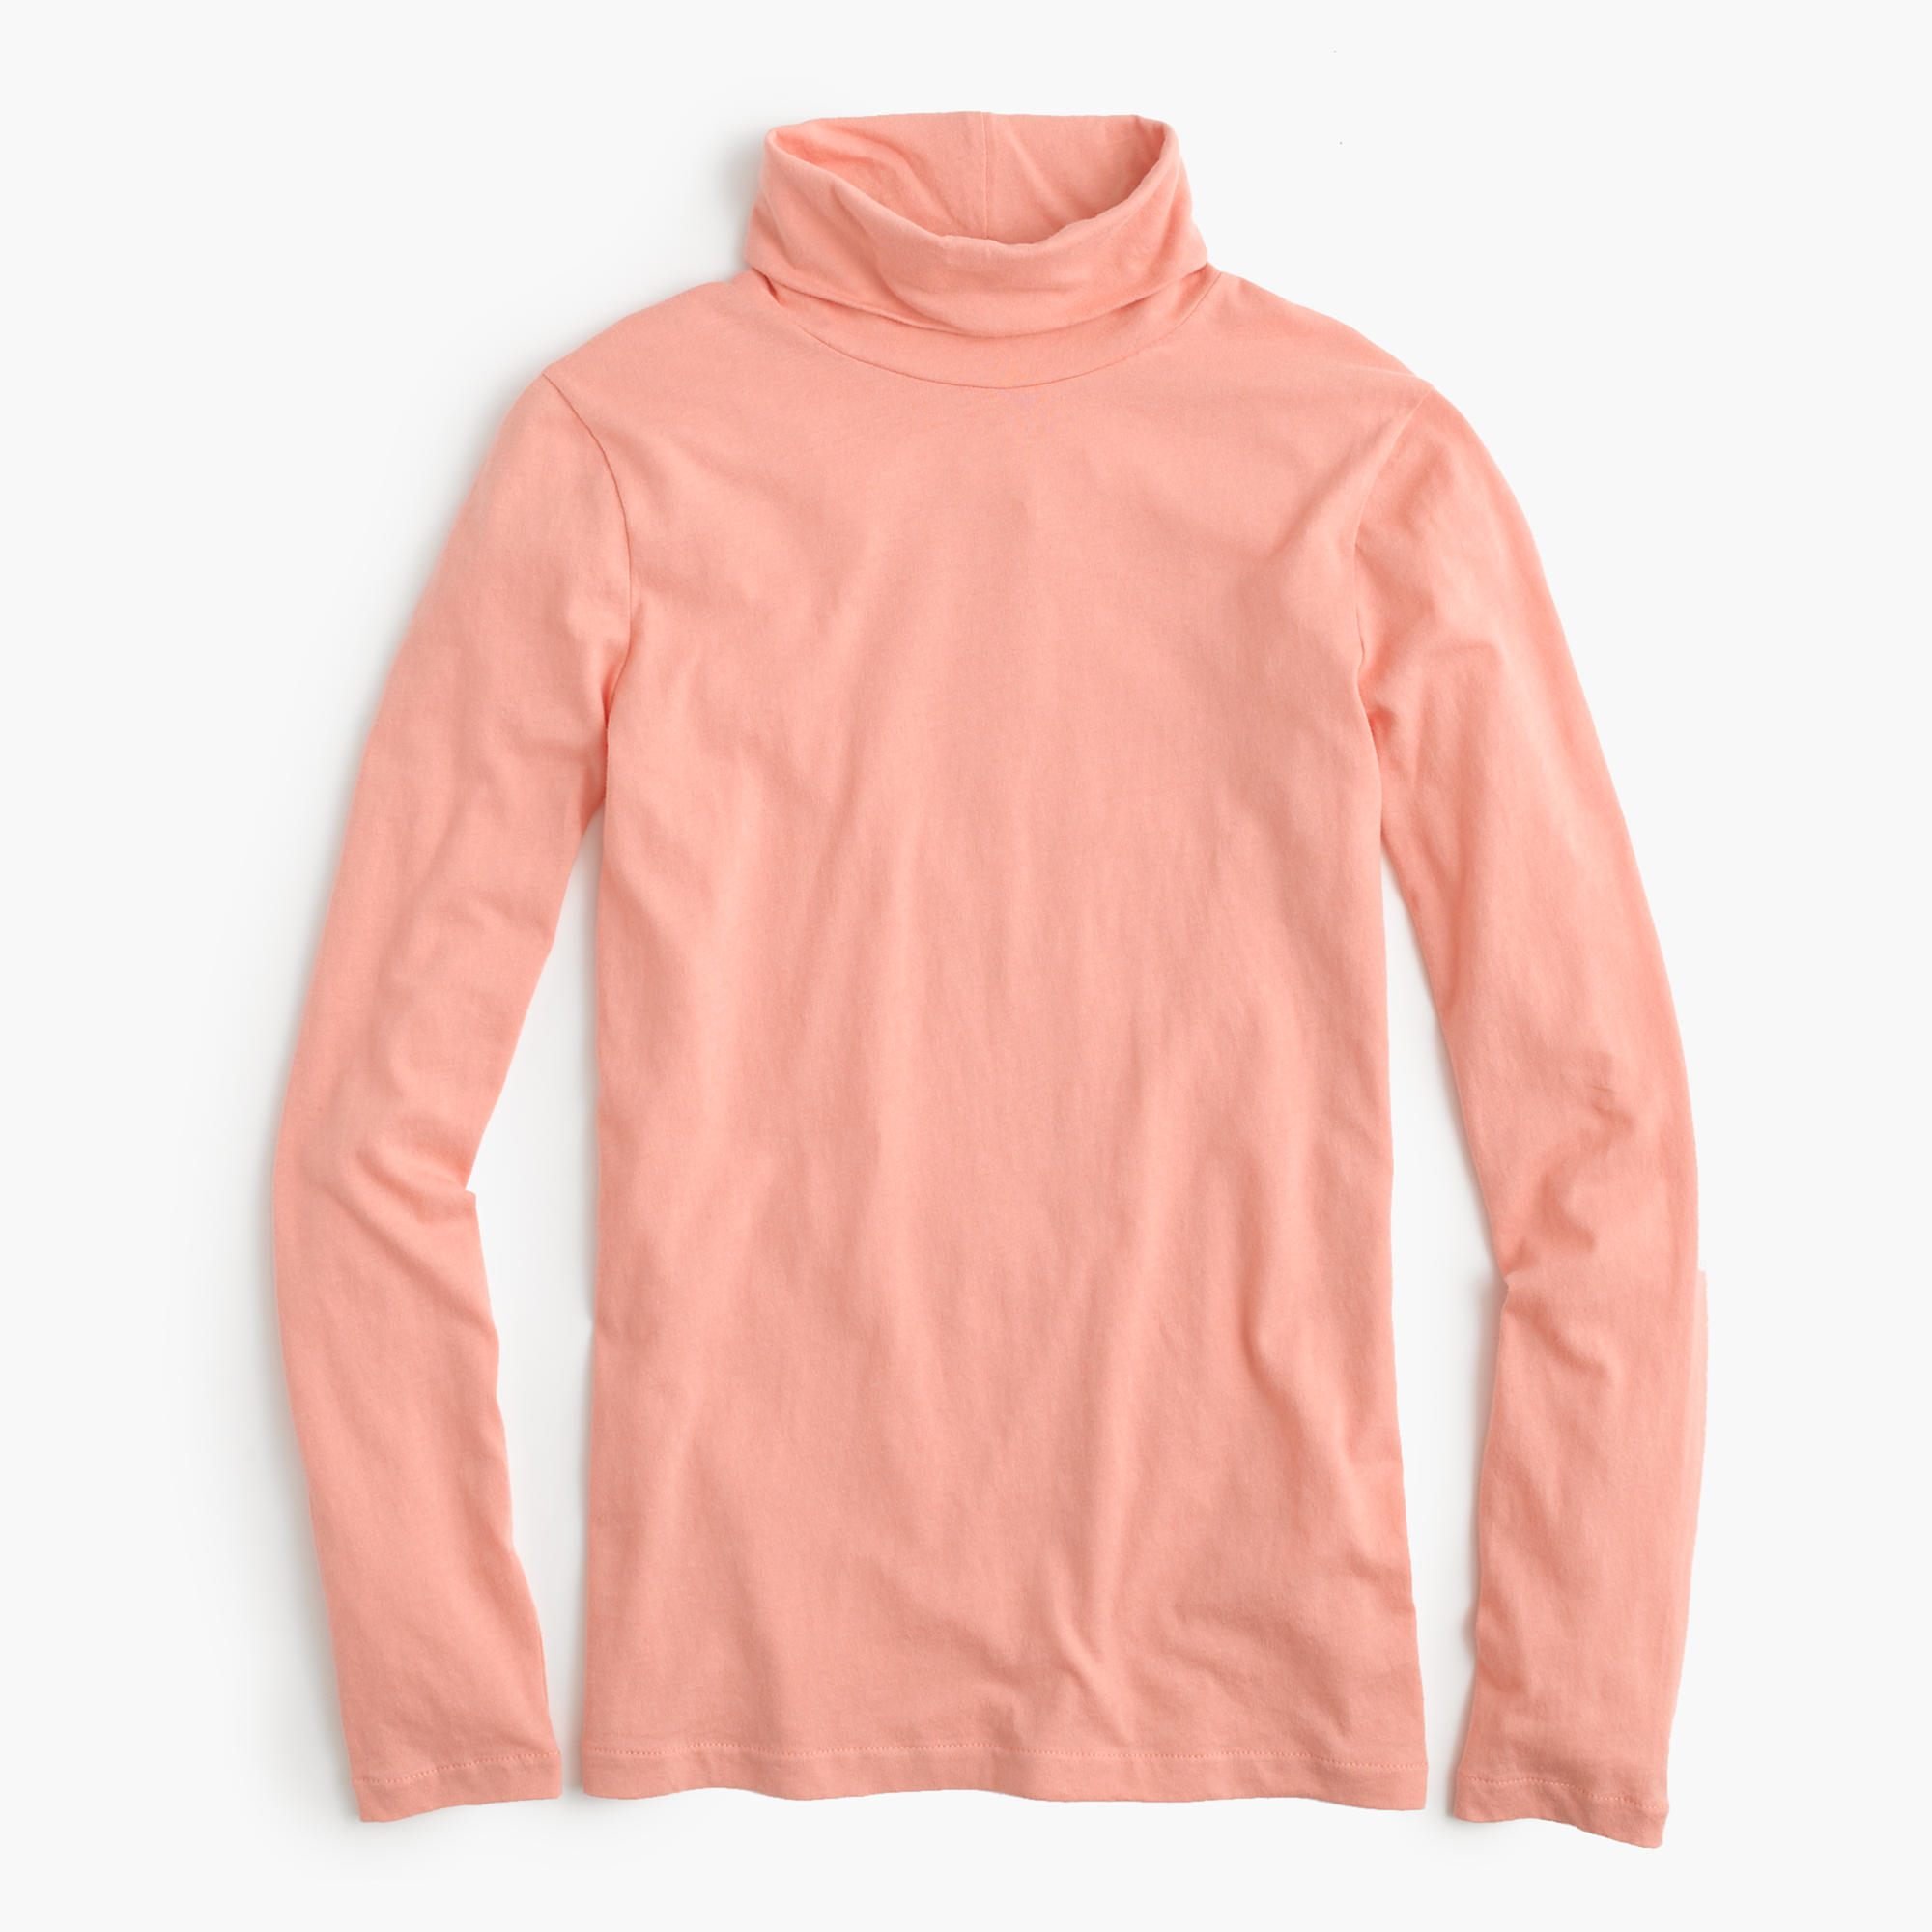 J.crew Tissue Turtleneck T-shirt in Pink (coral) | Lyst